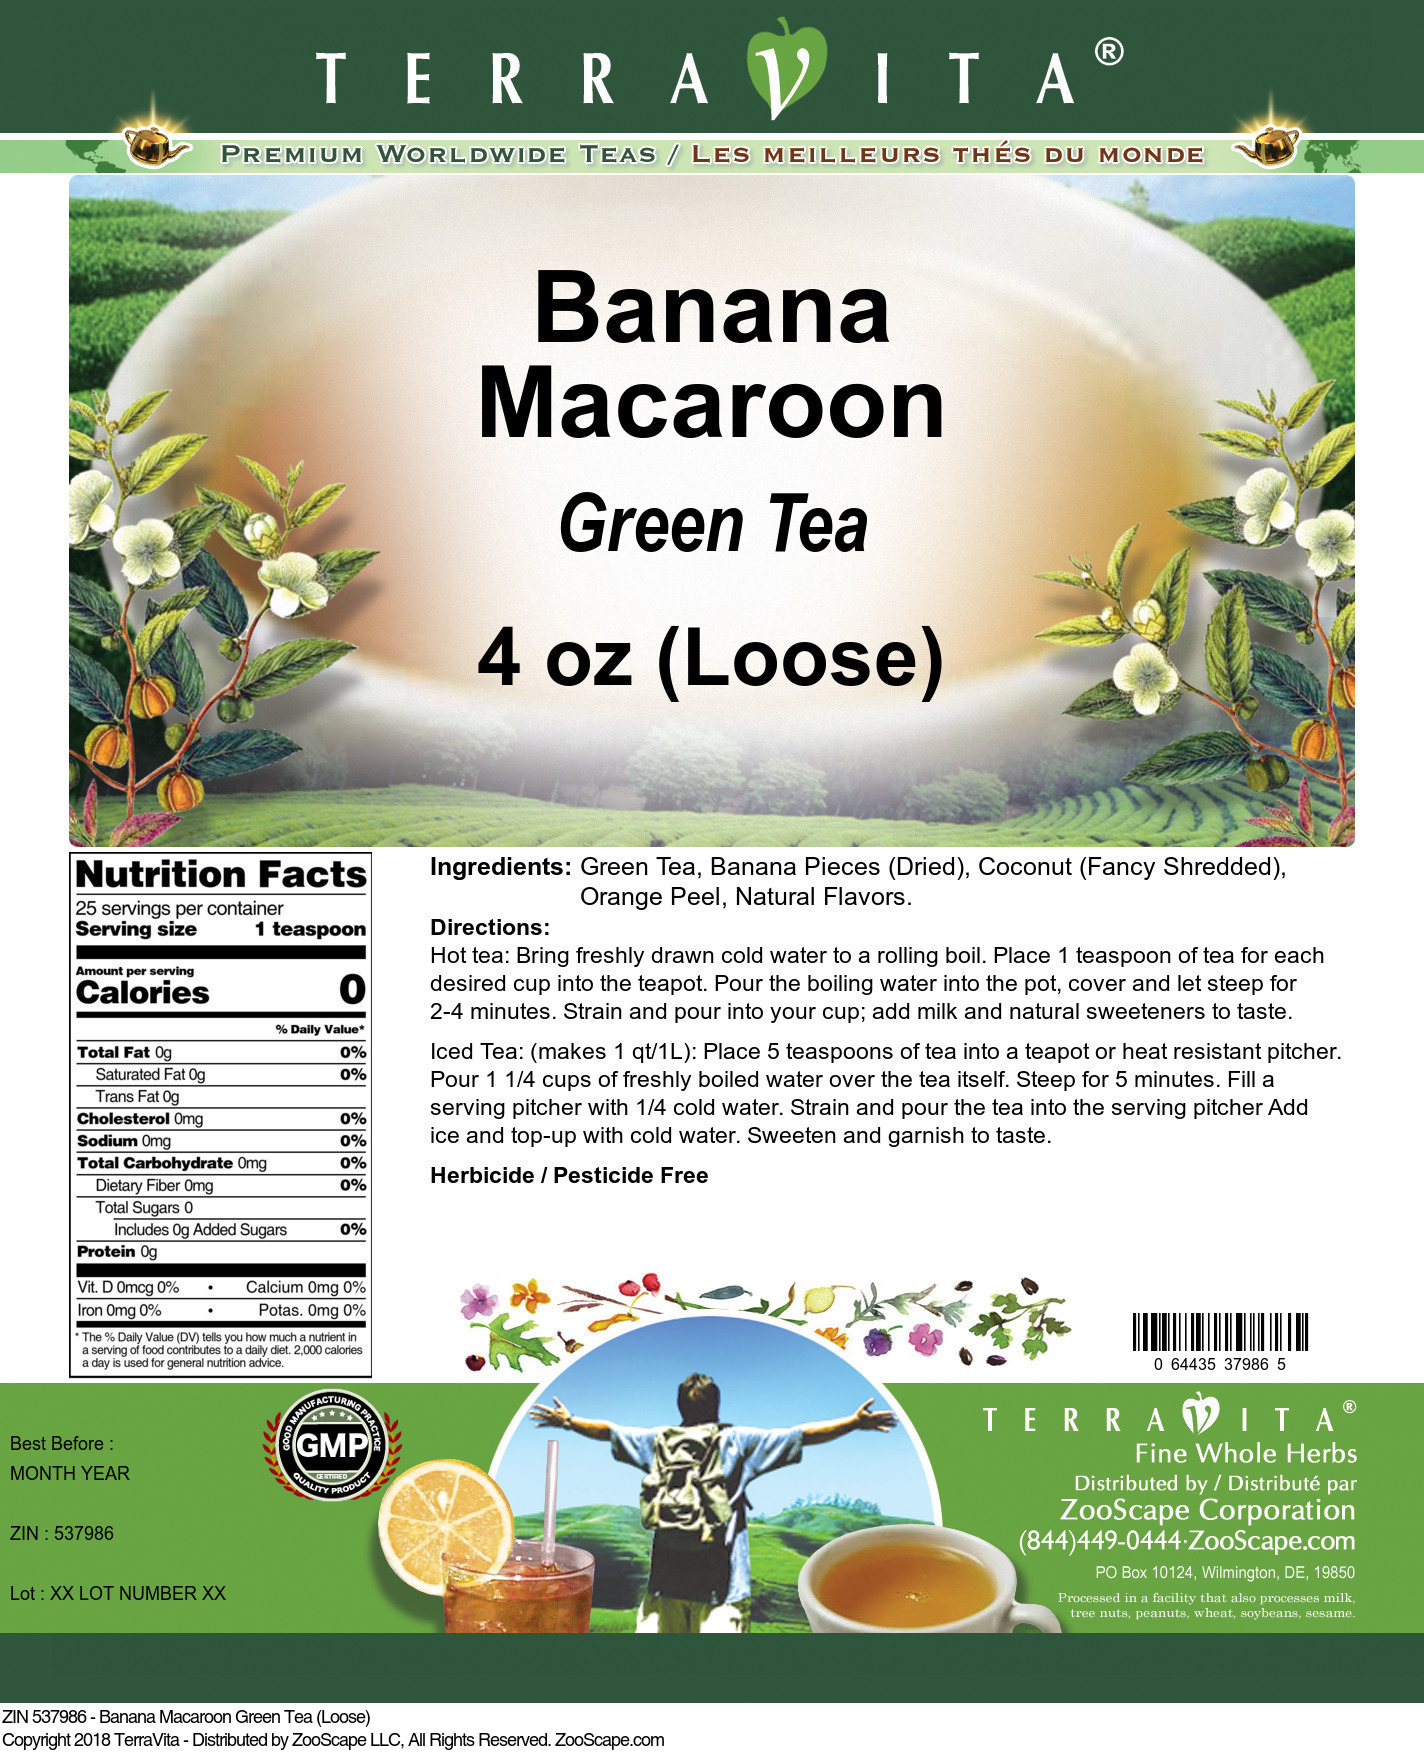 Banana Macaroon Green Tea (Loose) - Label